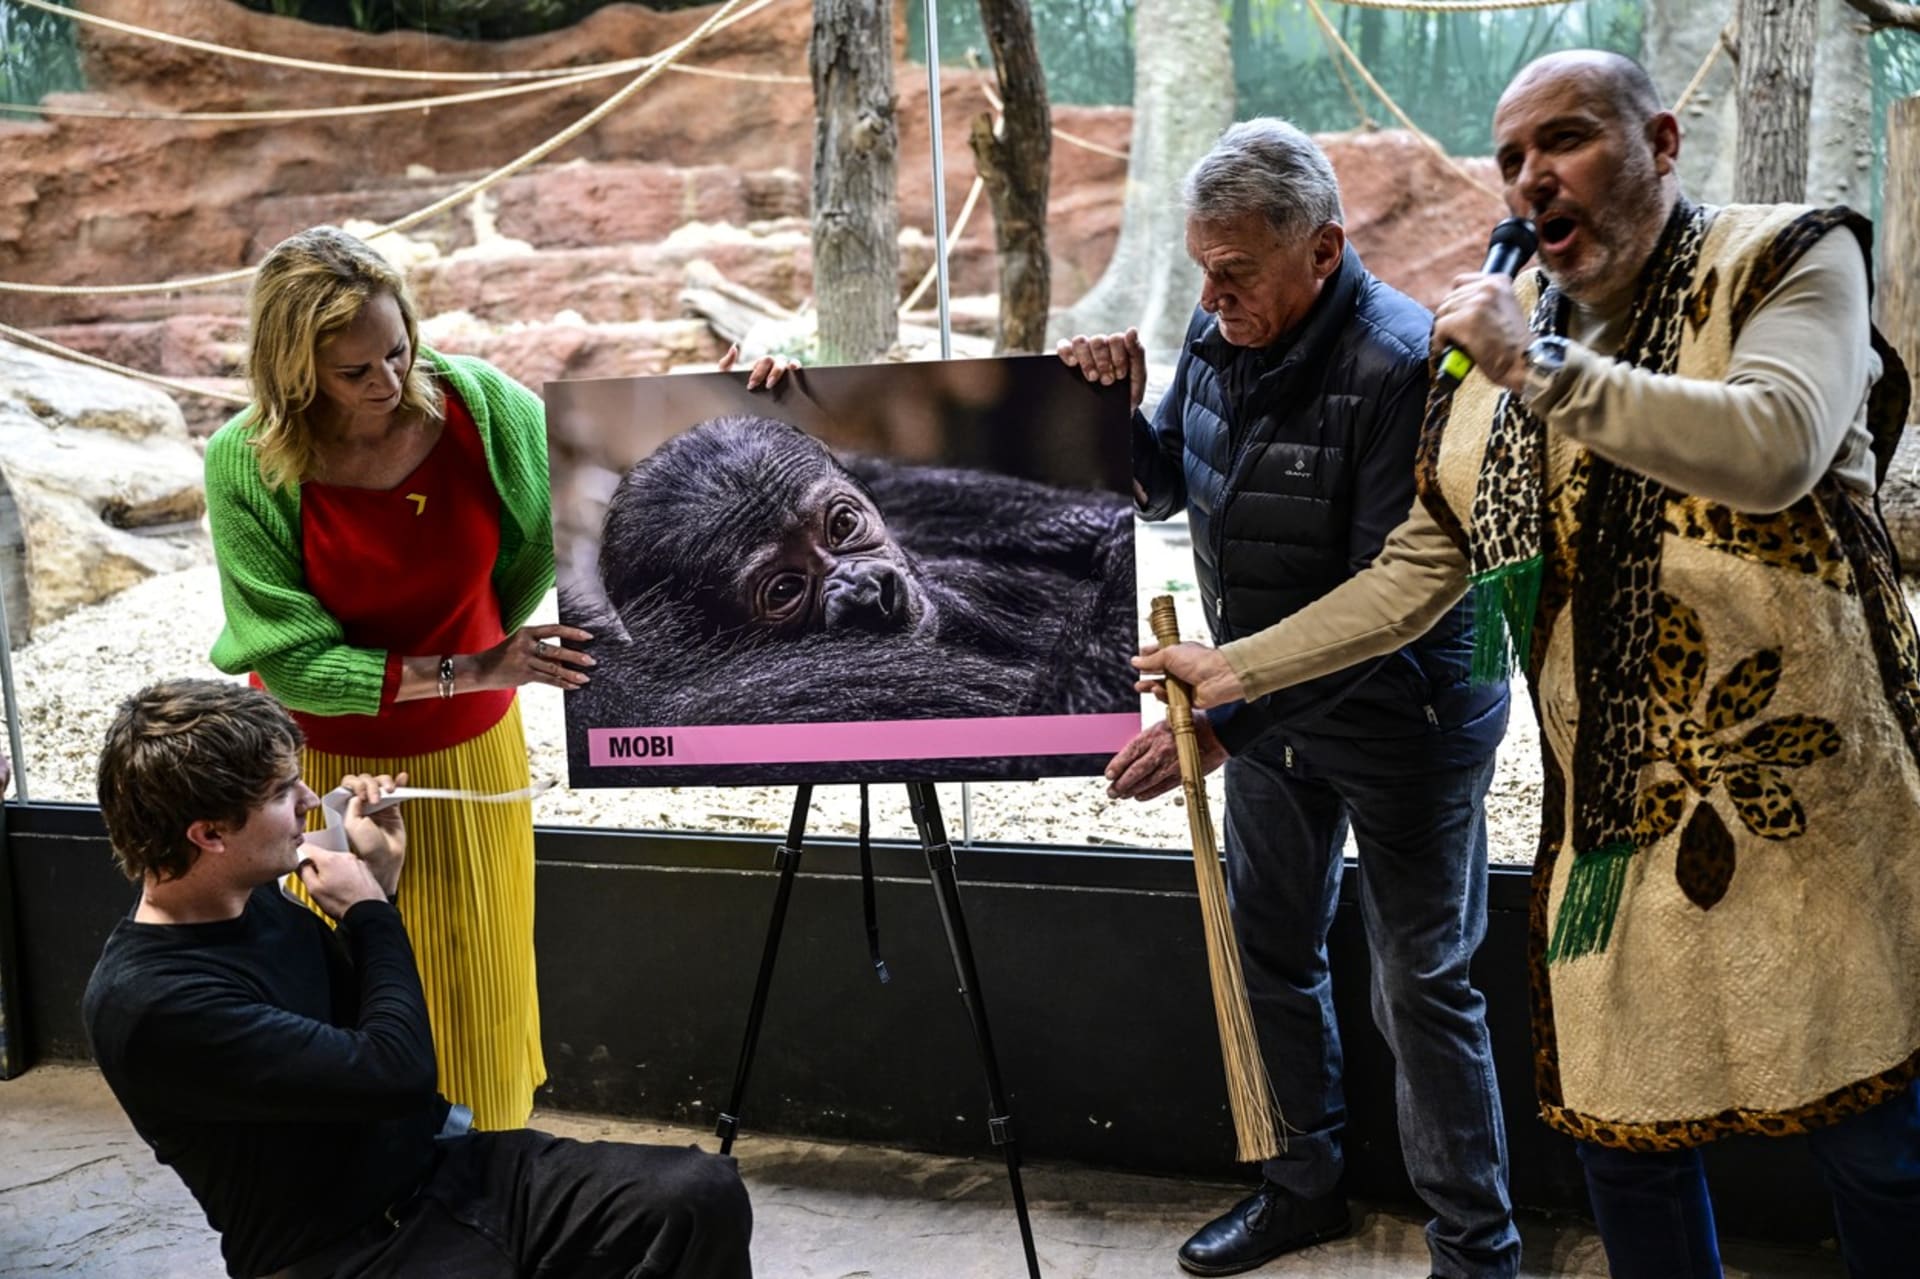 Křest gorilí samičky v zoo Praha 